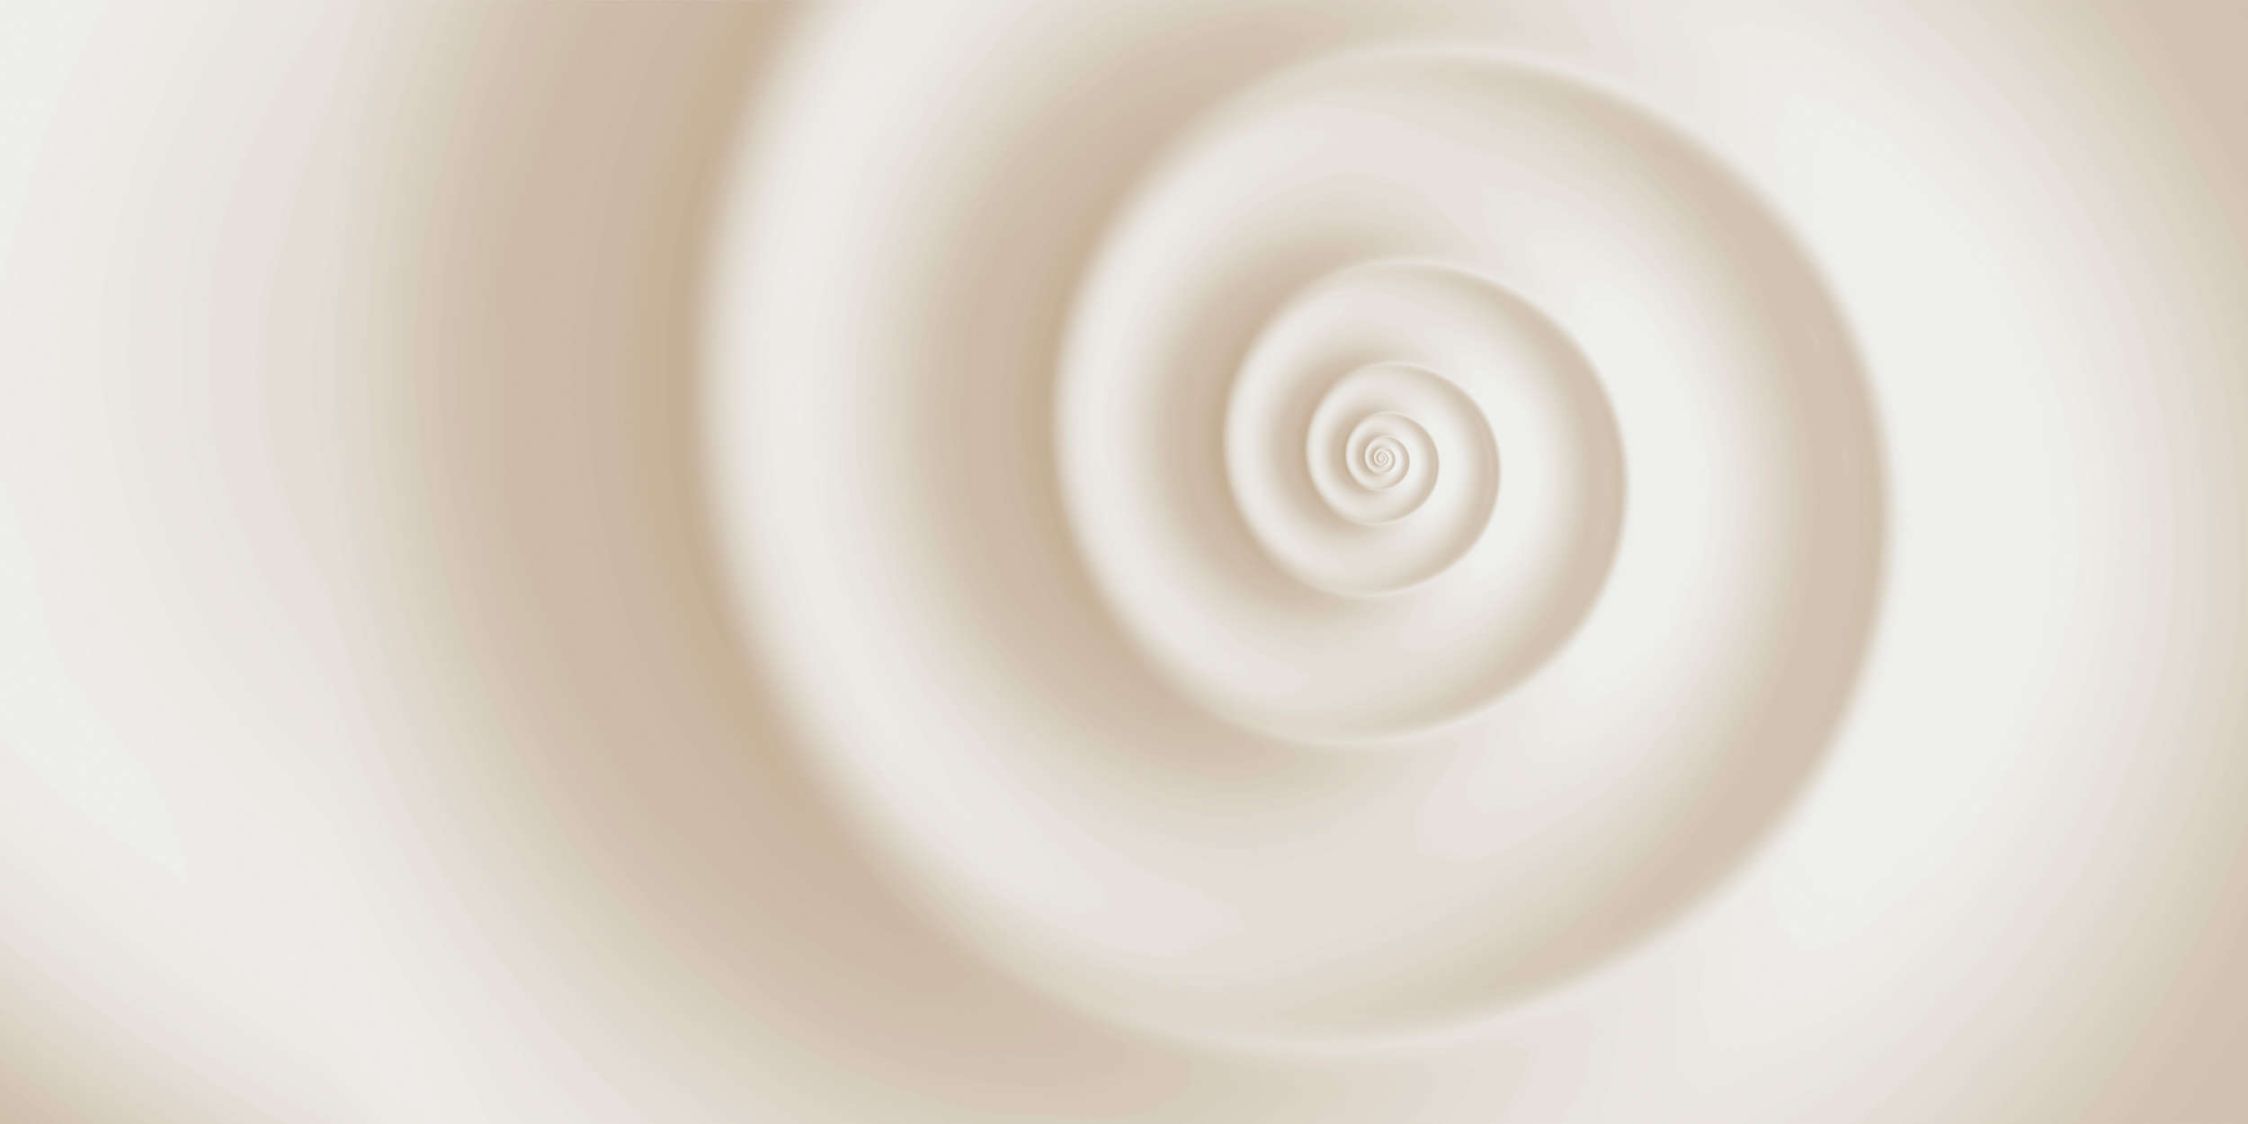             Fotomurali »swirl« - Leggero motivo a spirale - Materiali non tessuto premium liscio e leggermente lucido
        